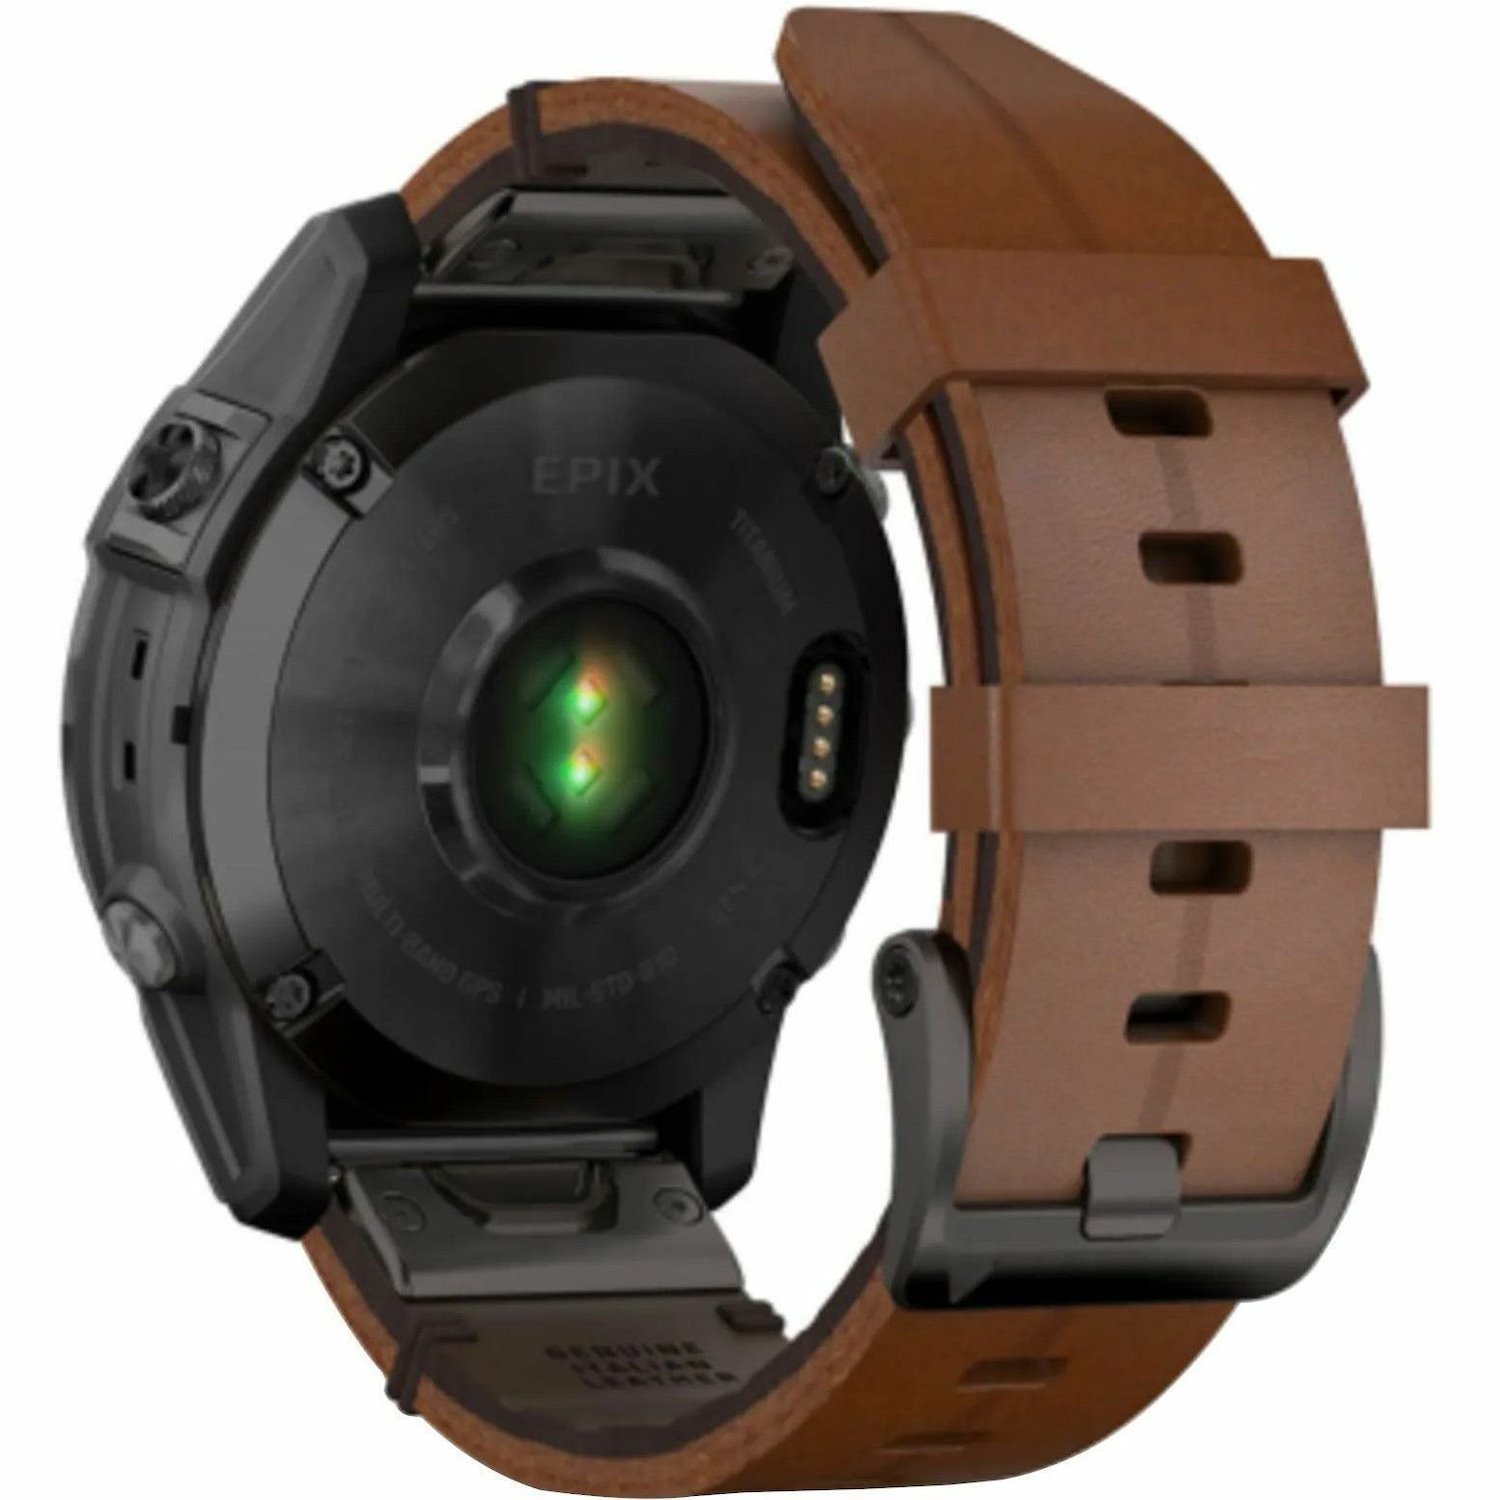 Garmin epix (Gen 2) Smart Watch - Titanium, Black Case Color - Chestnut Band Color - Titanium, Fiber Reinforced Polymer Case Material - Leather Band Material - Wireless LAN